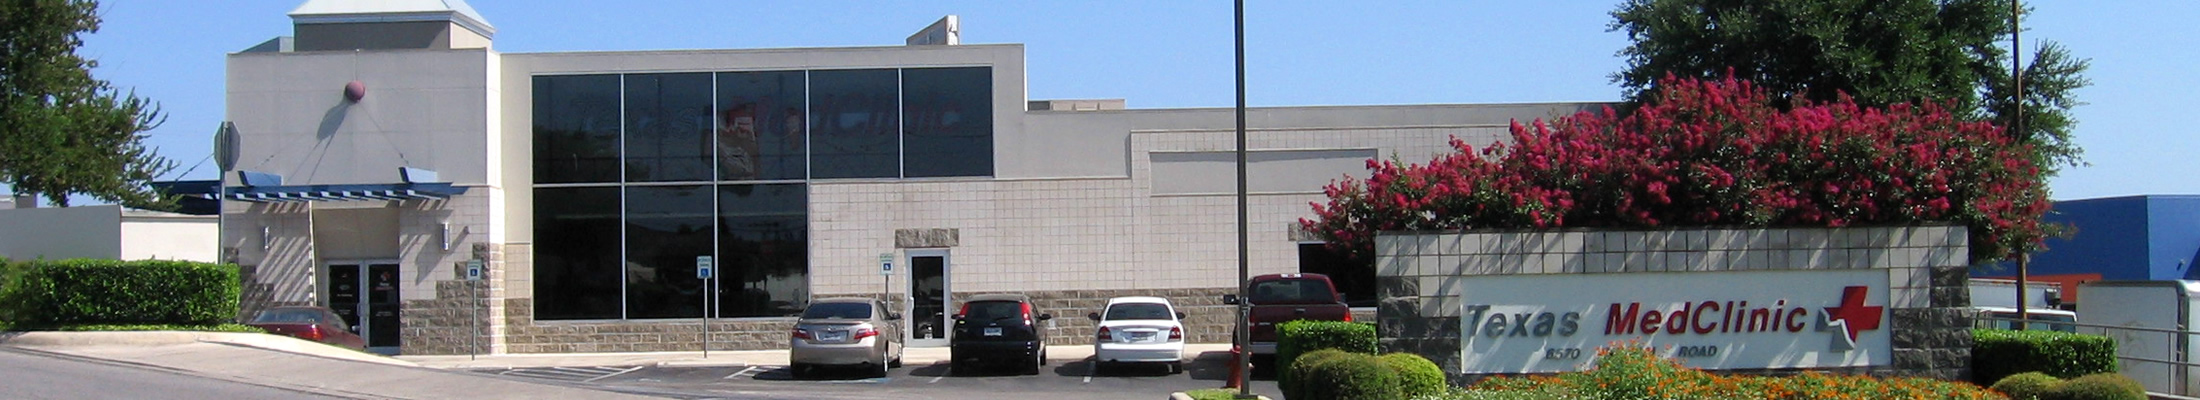 Ingram & Loop 410 Walk-in Clinic San Antonio | Med Clinics ...